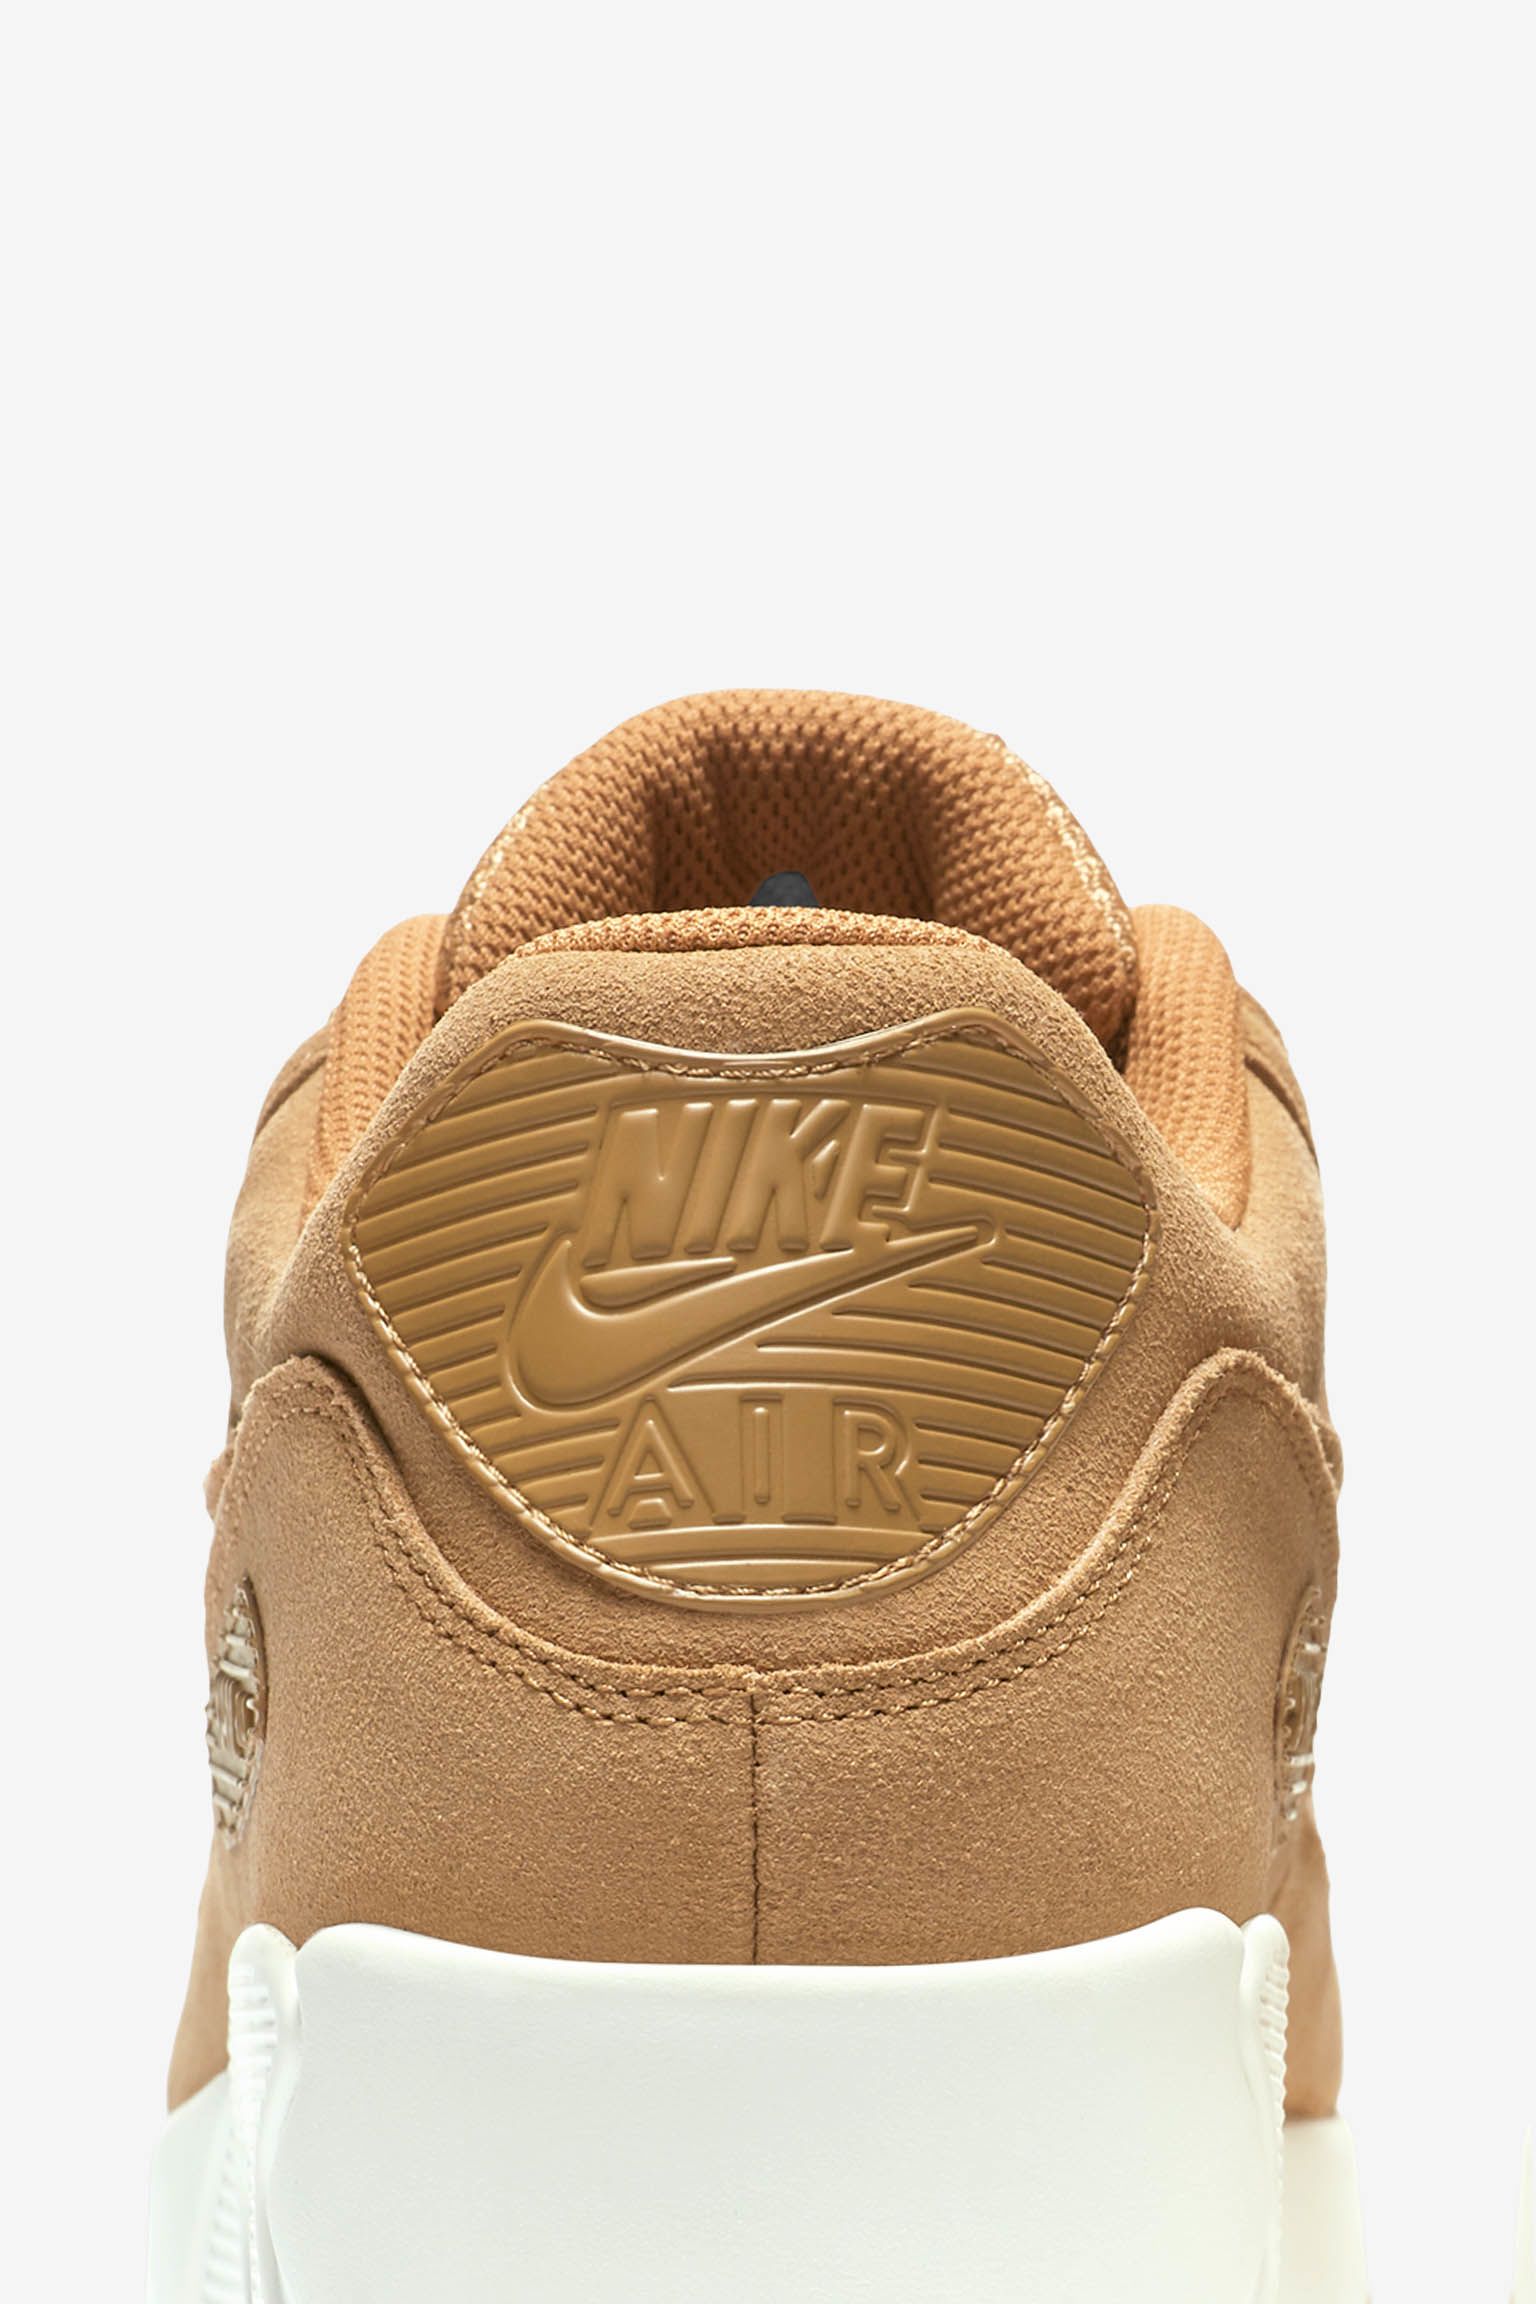 Nike Air Max 90 Ultra 2.0 'Flax' Release Date. Nike SNKRS